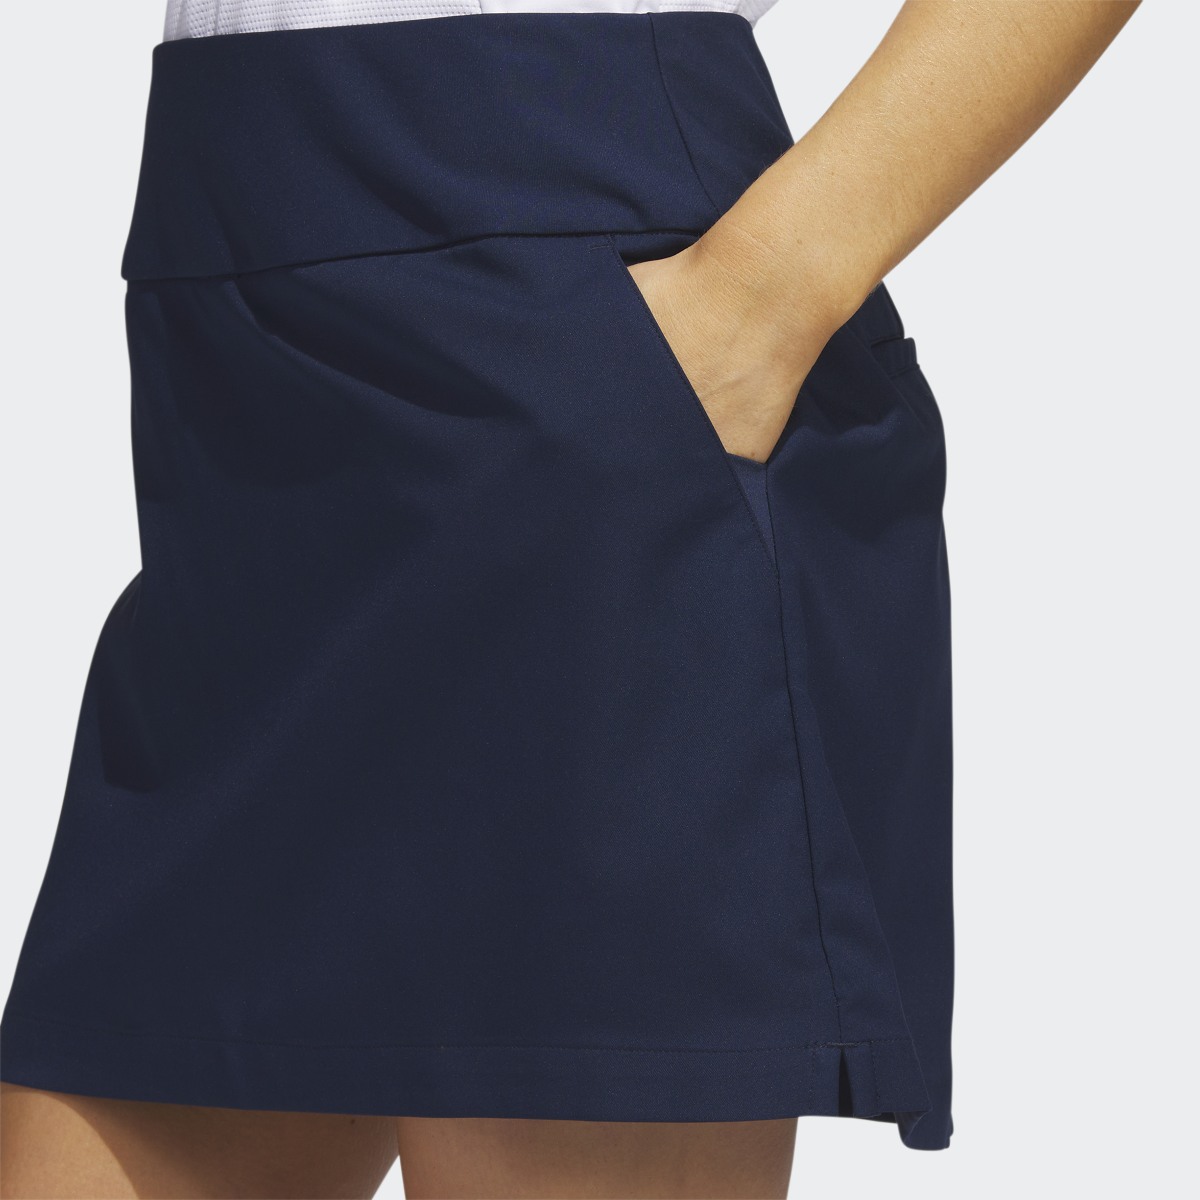 Adidas Ultimate365 Solid Skirt. 5